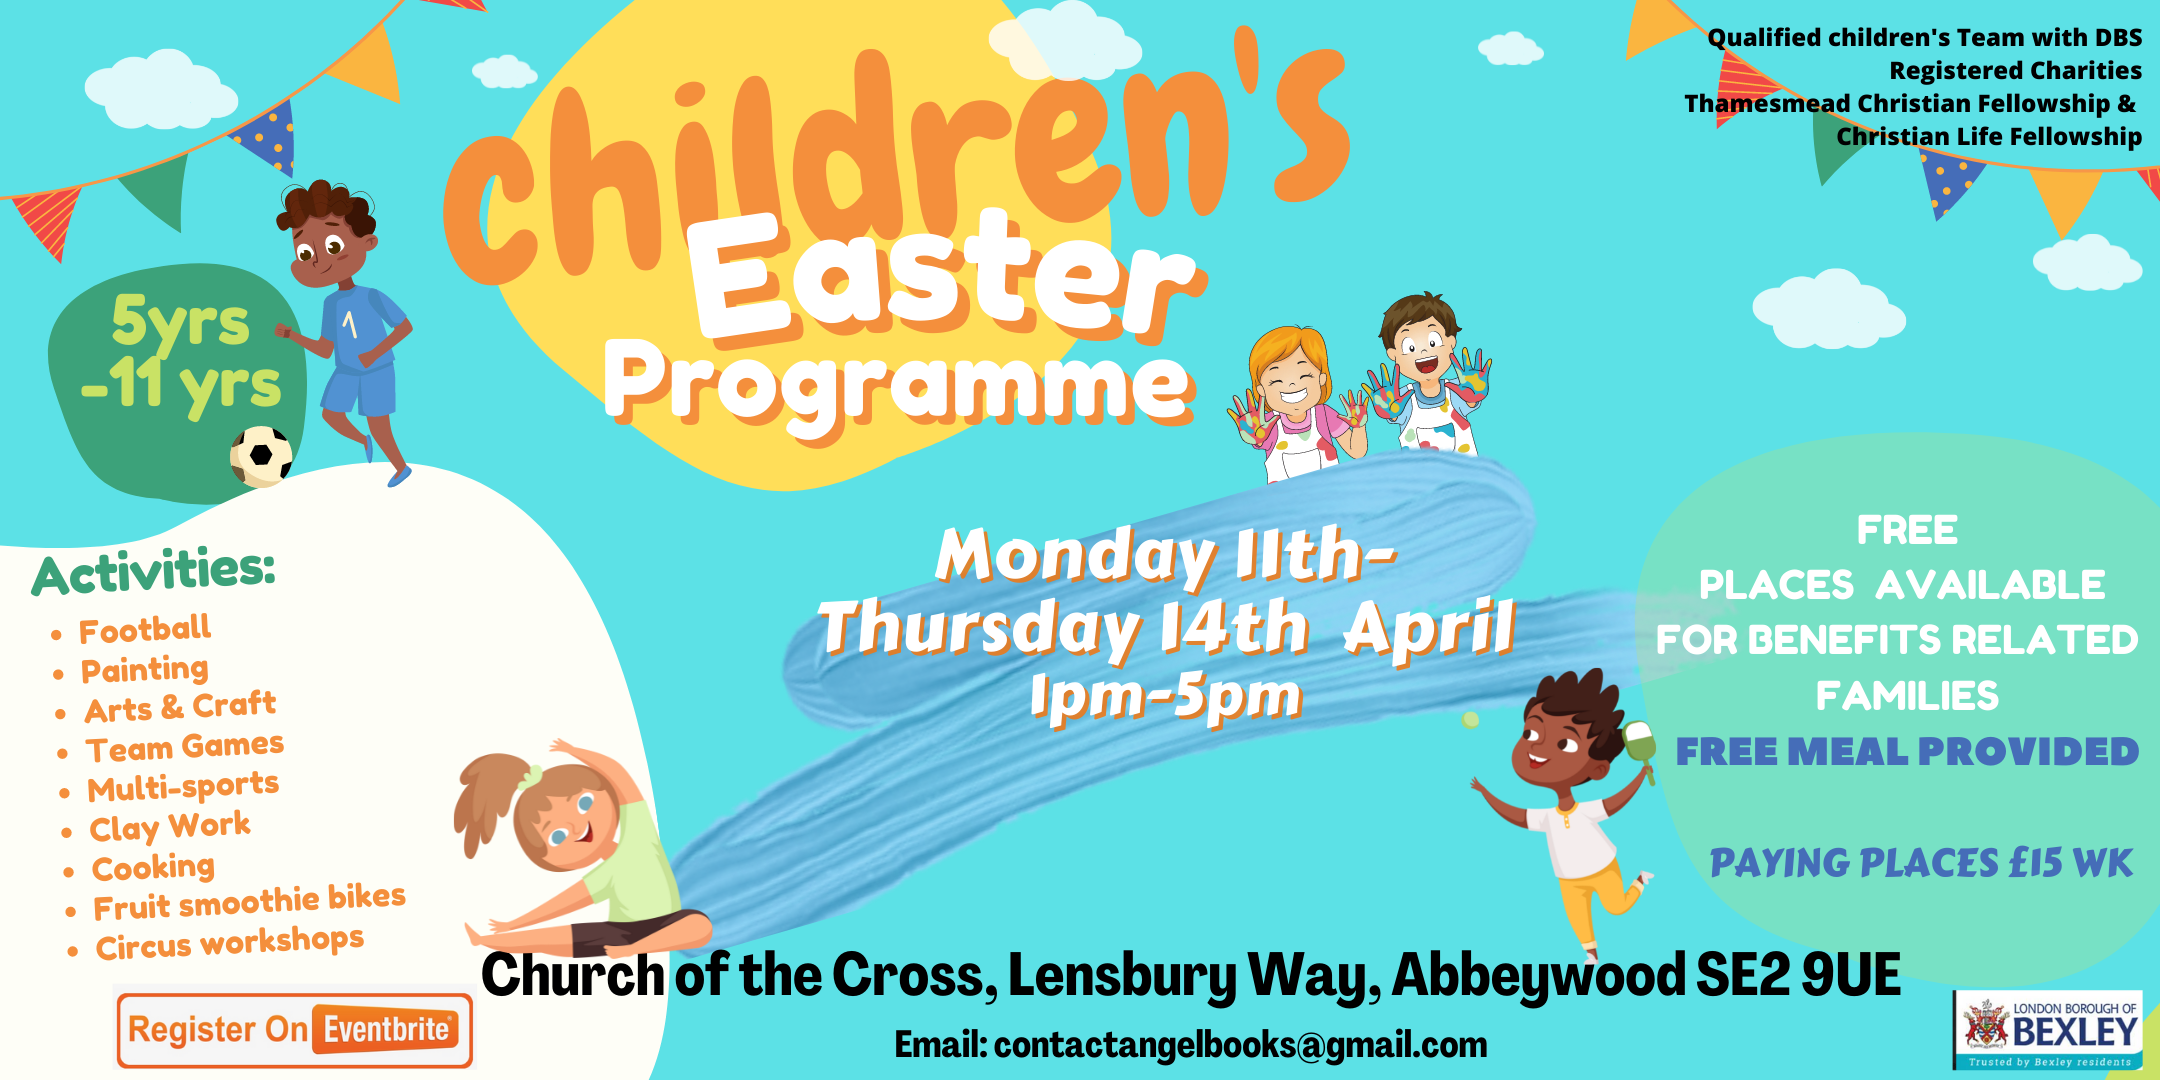 Children's Easter Programme Live Well Greenwich